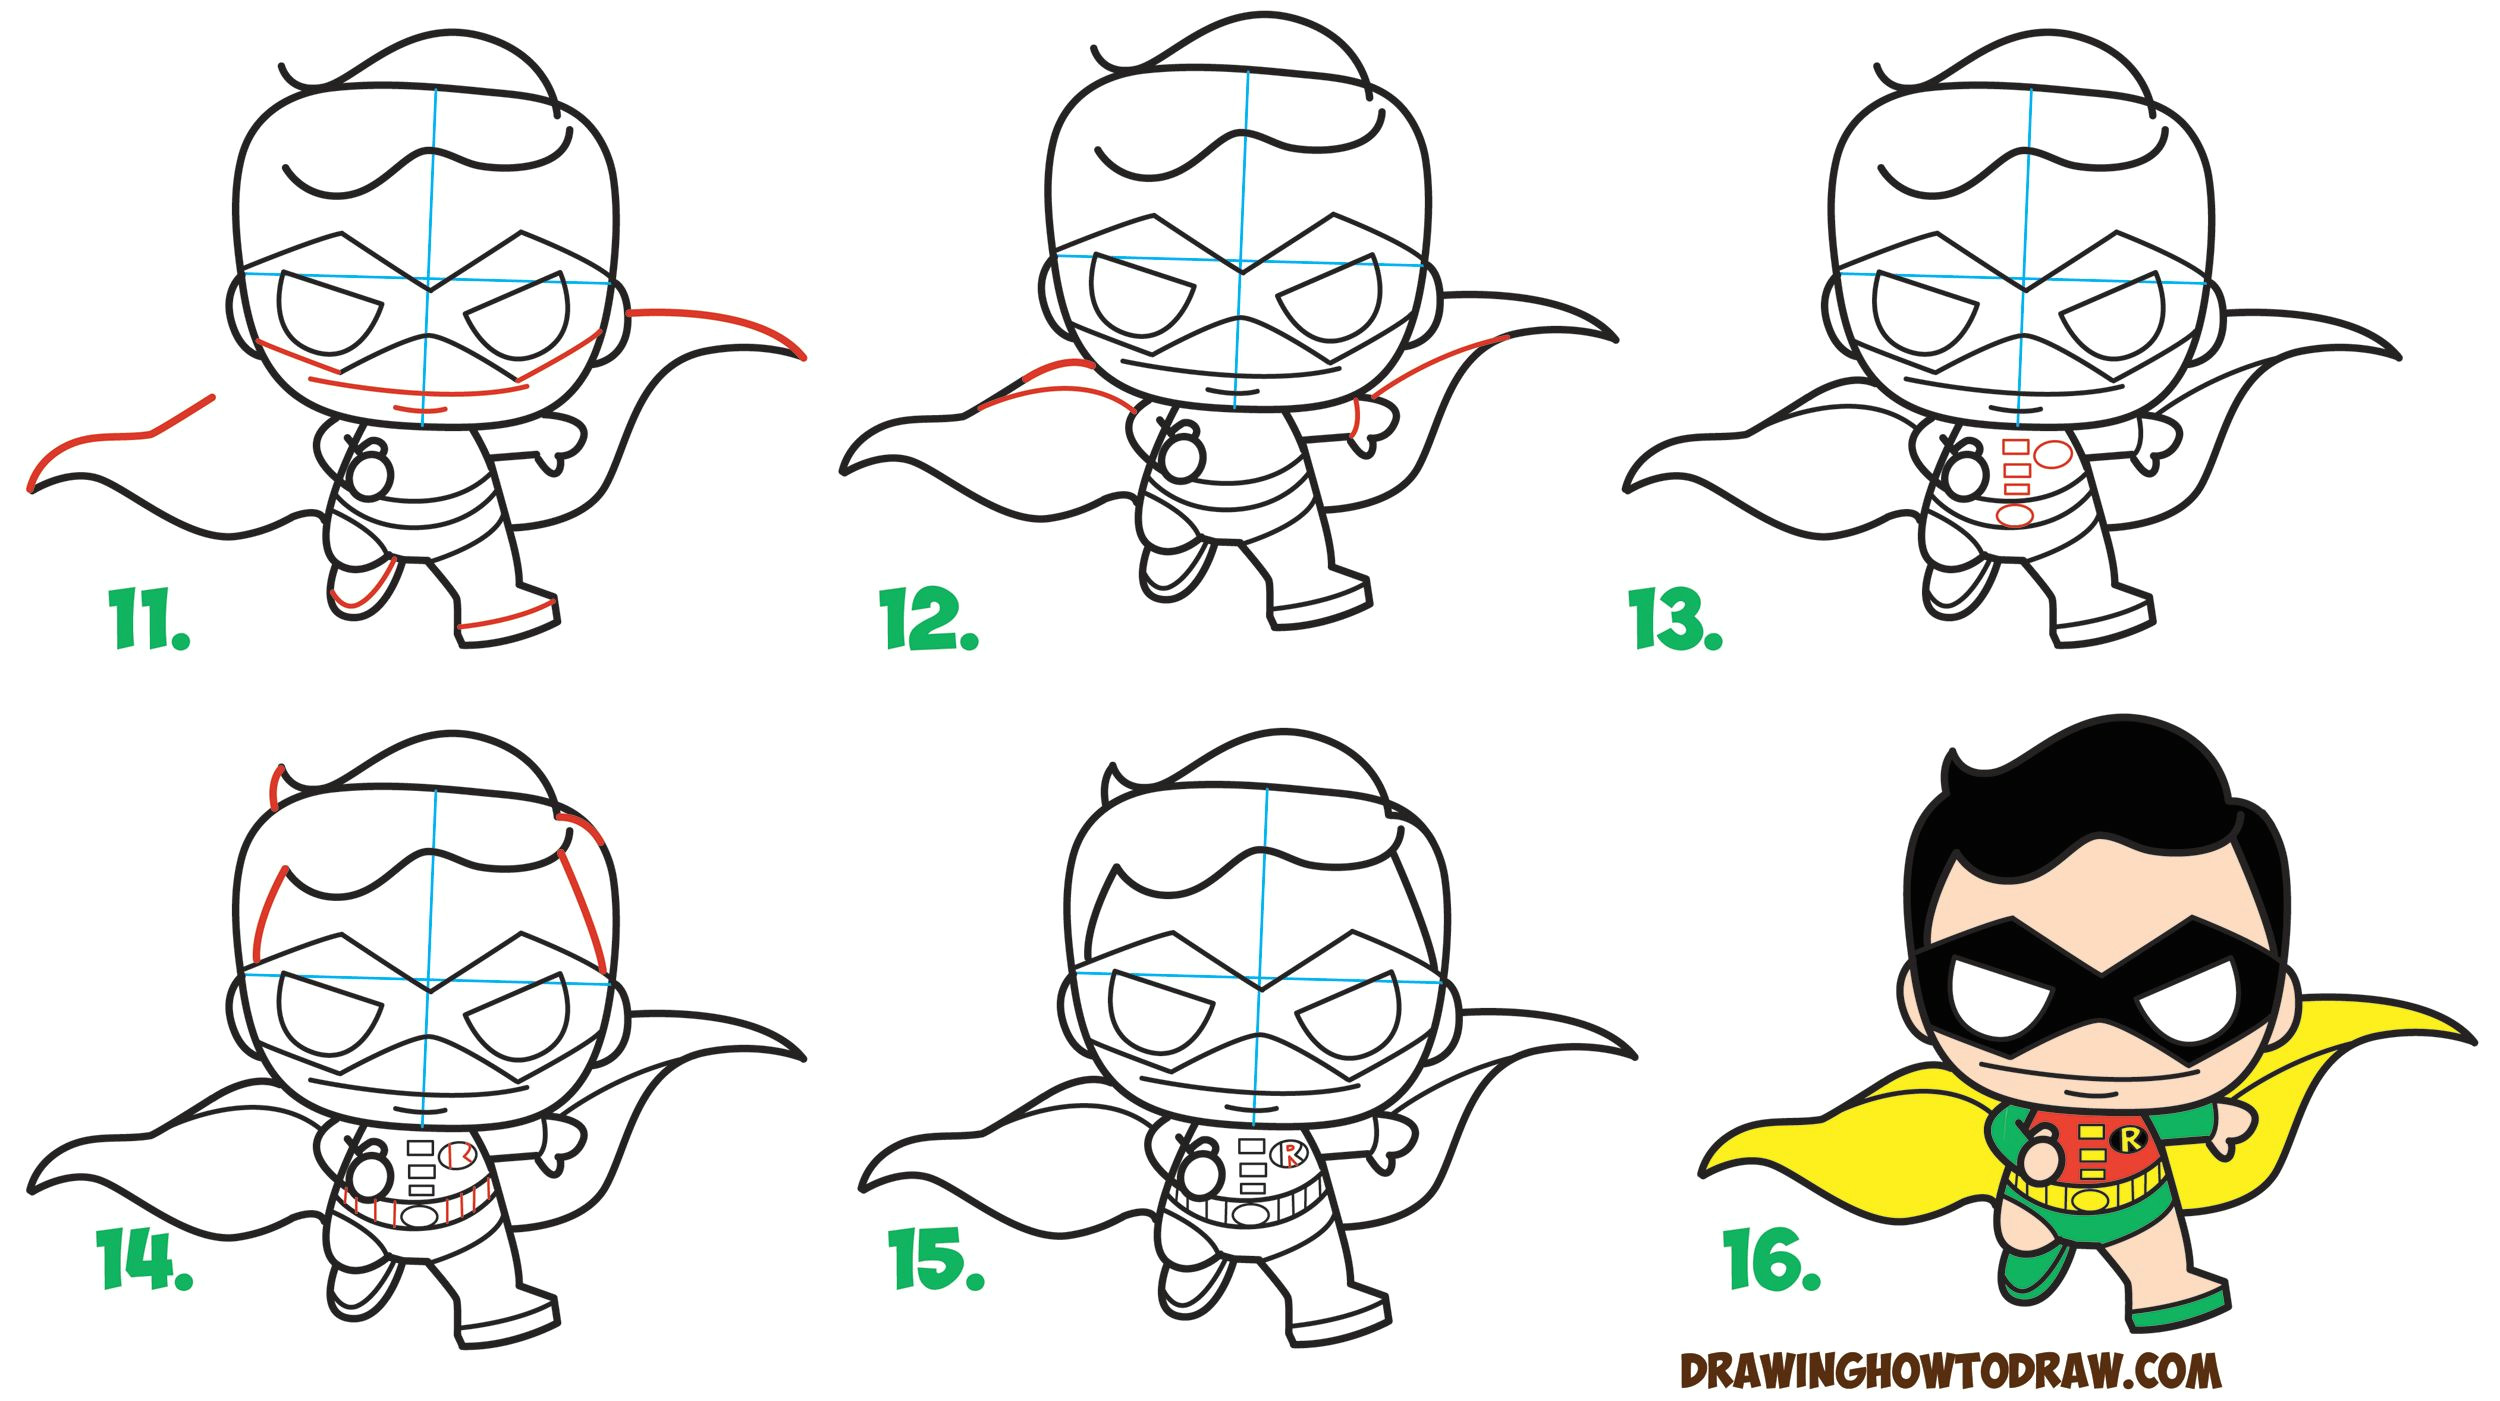 Drawing Cartoons Chibi How to Draw Cute Kawaii Chibi Robin From Dc Comics Batman